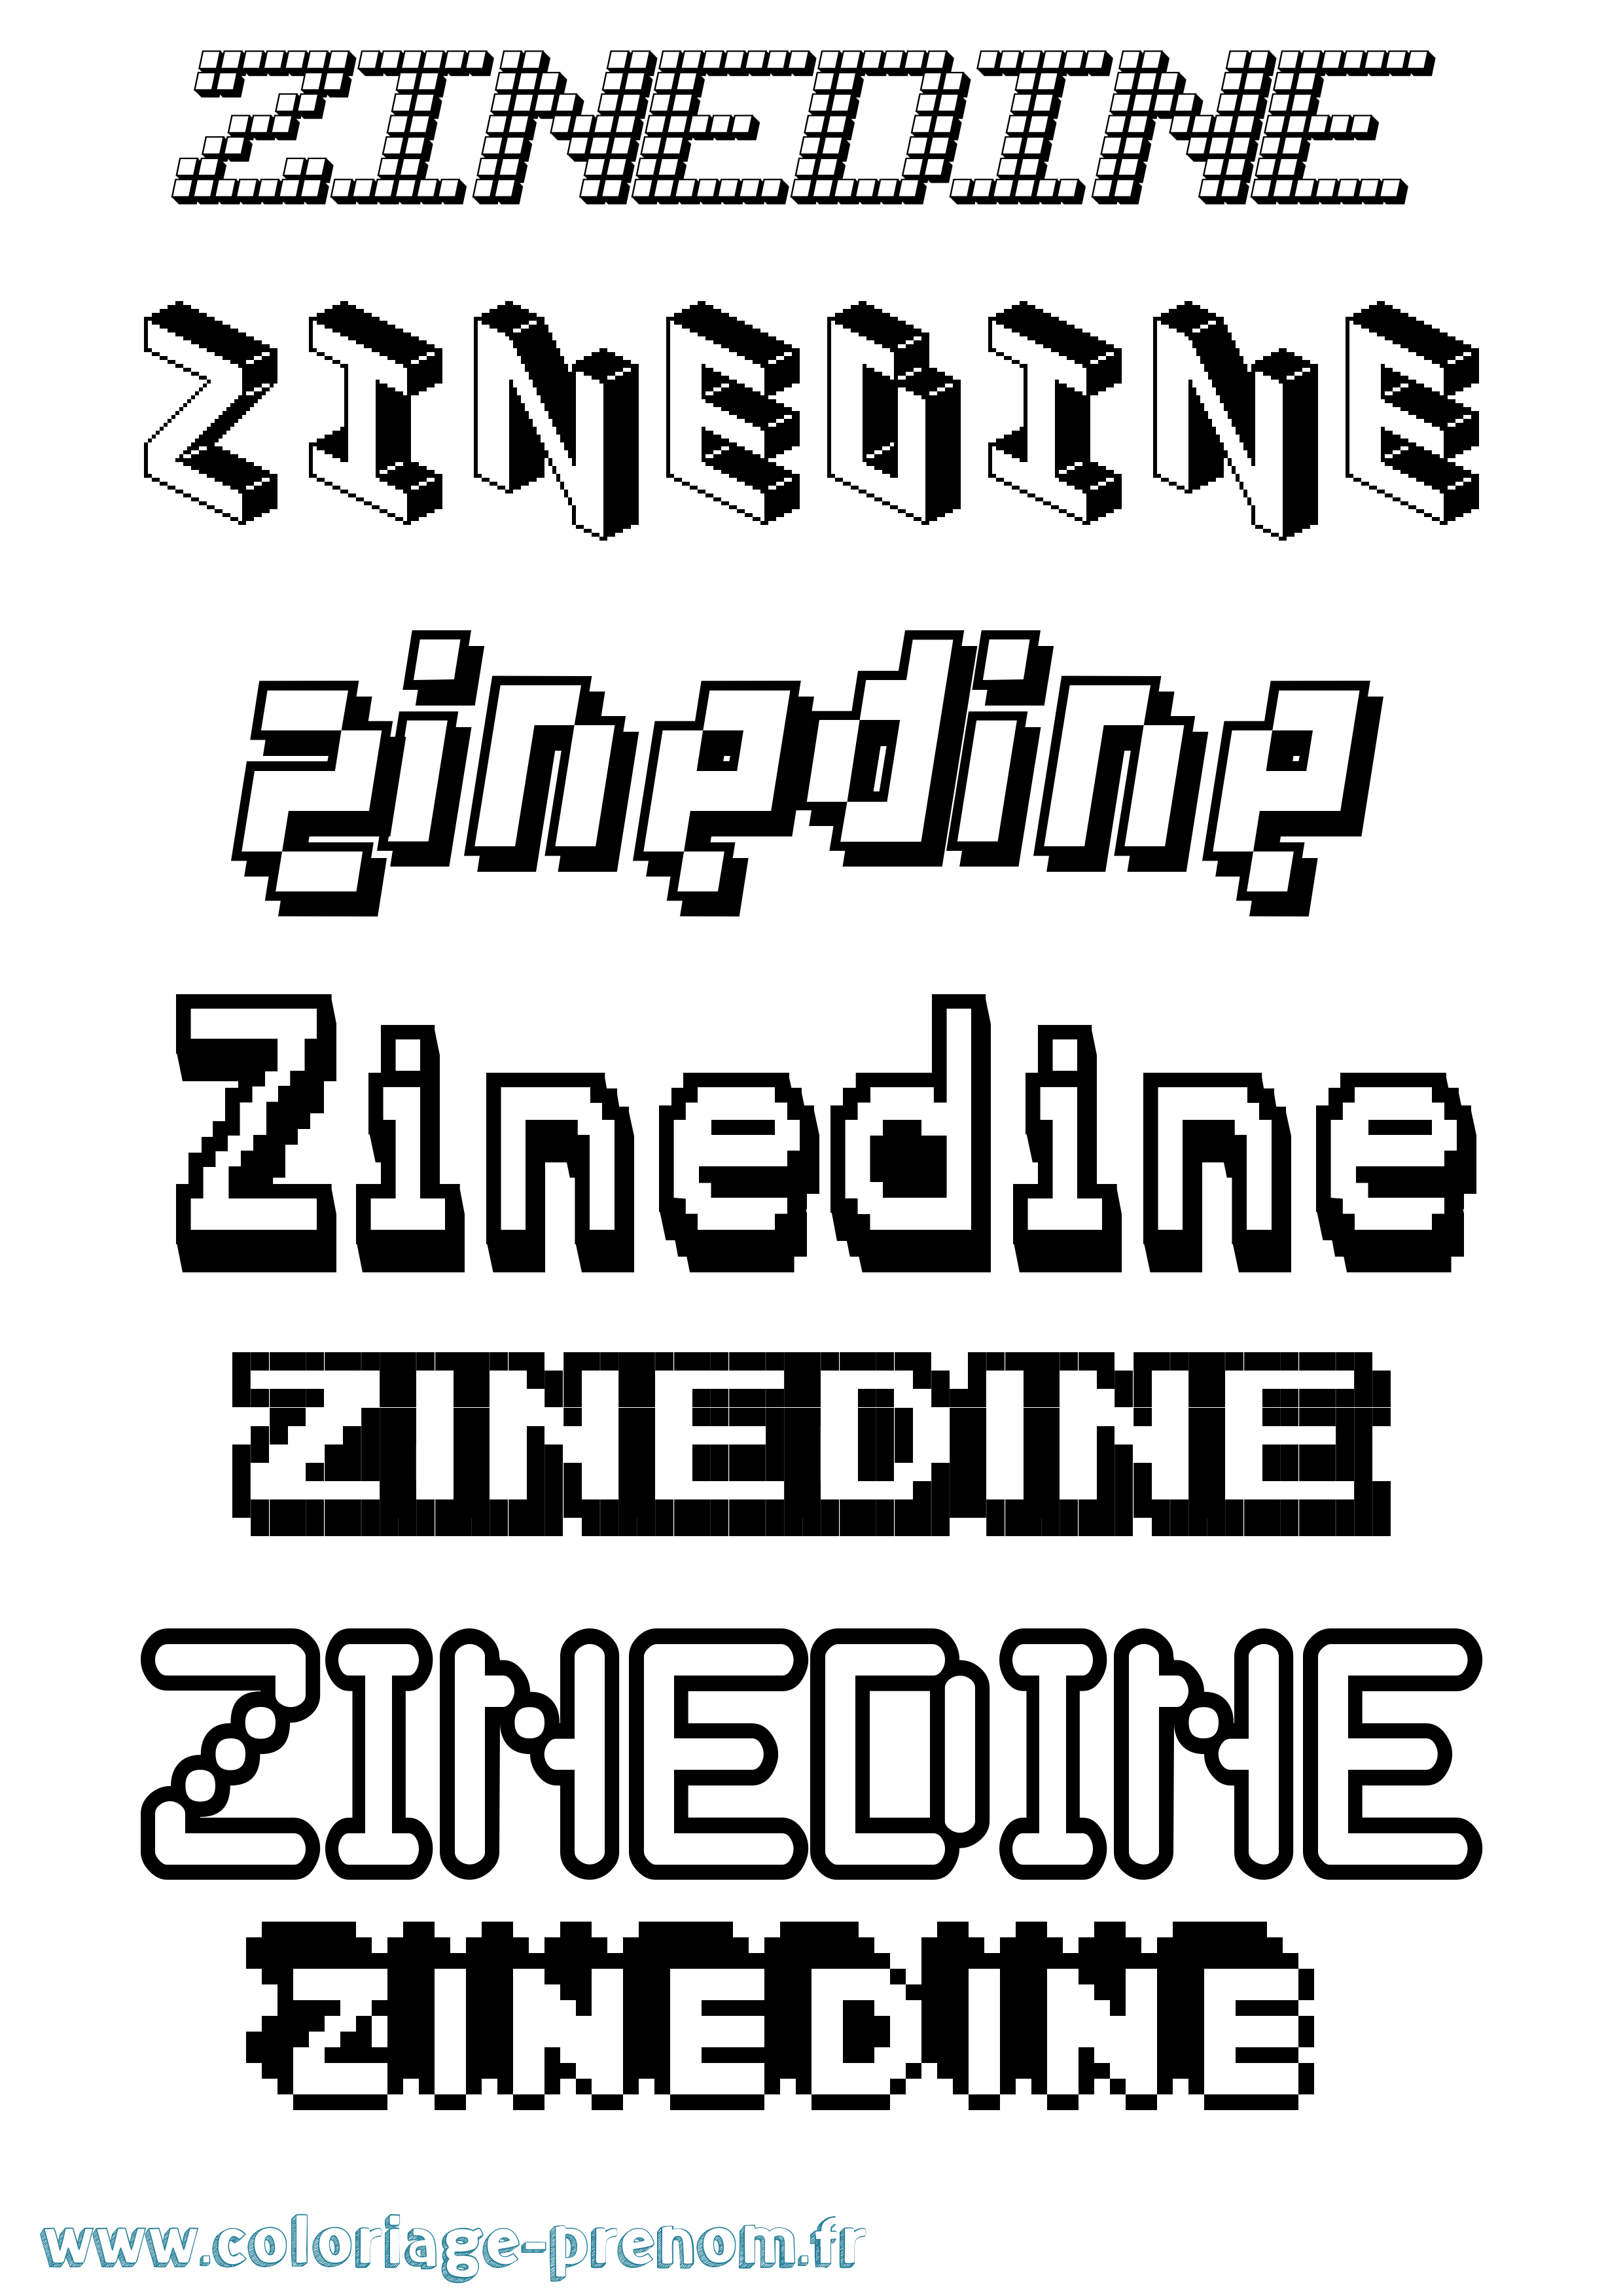 Coloriage prénom Zinedine